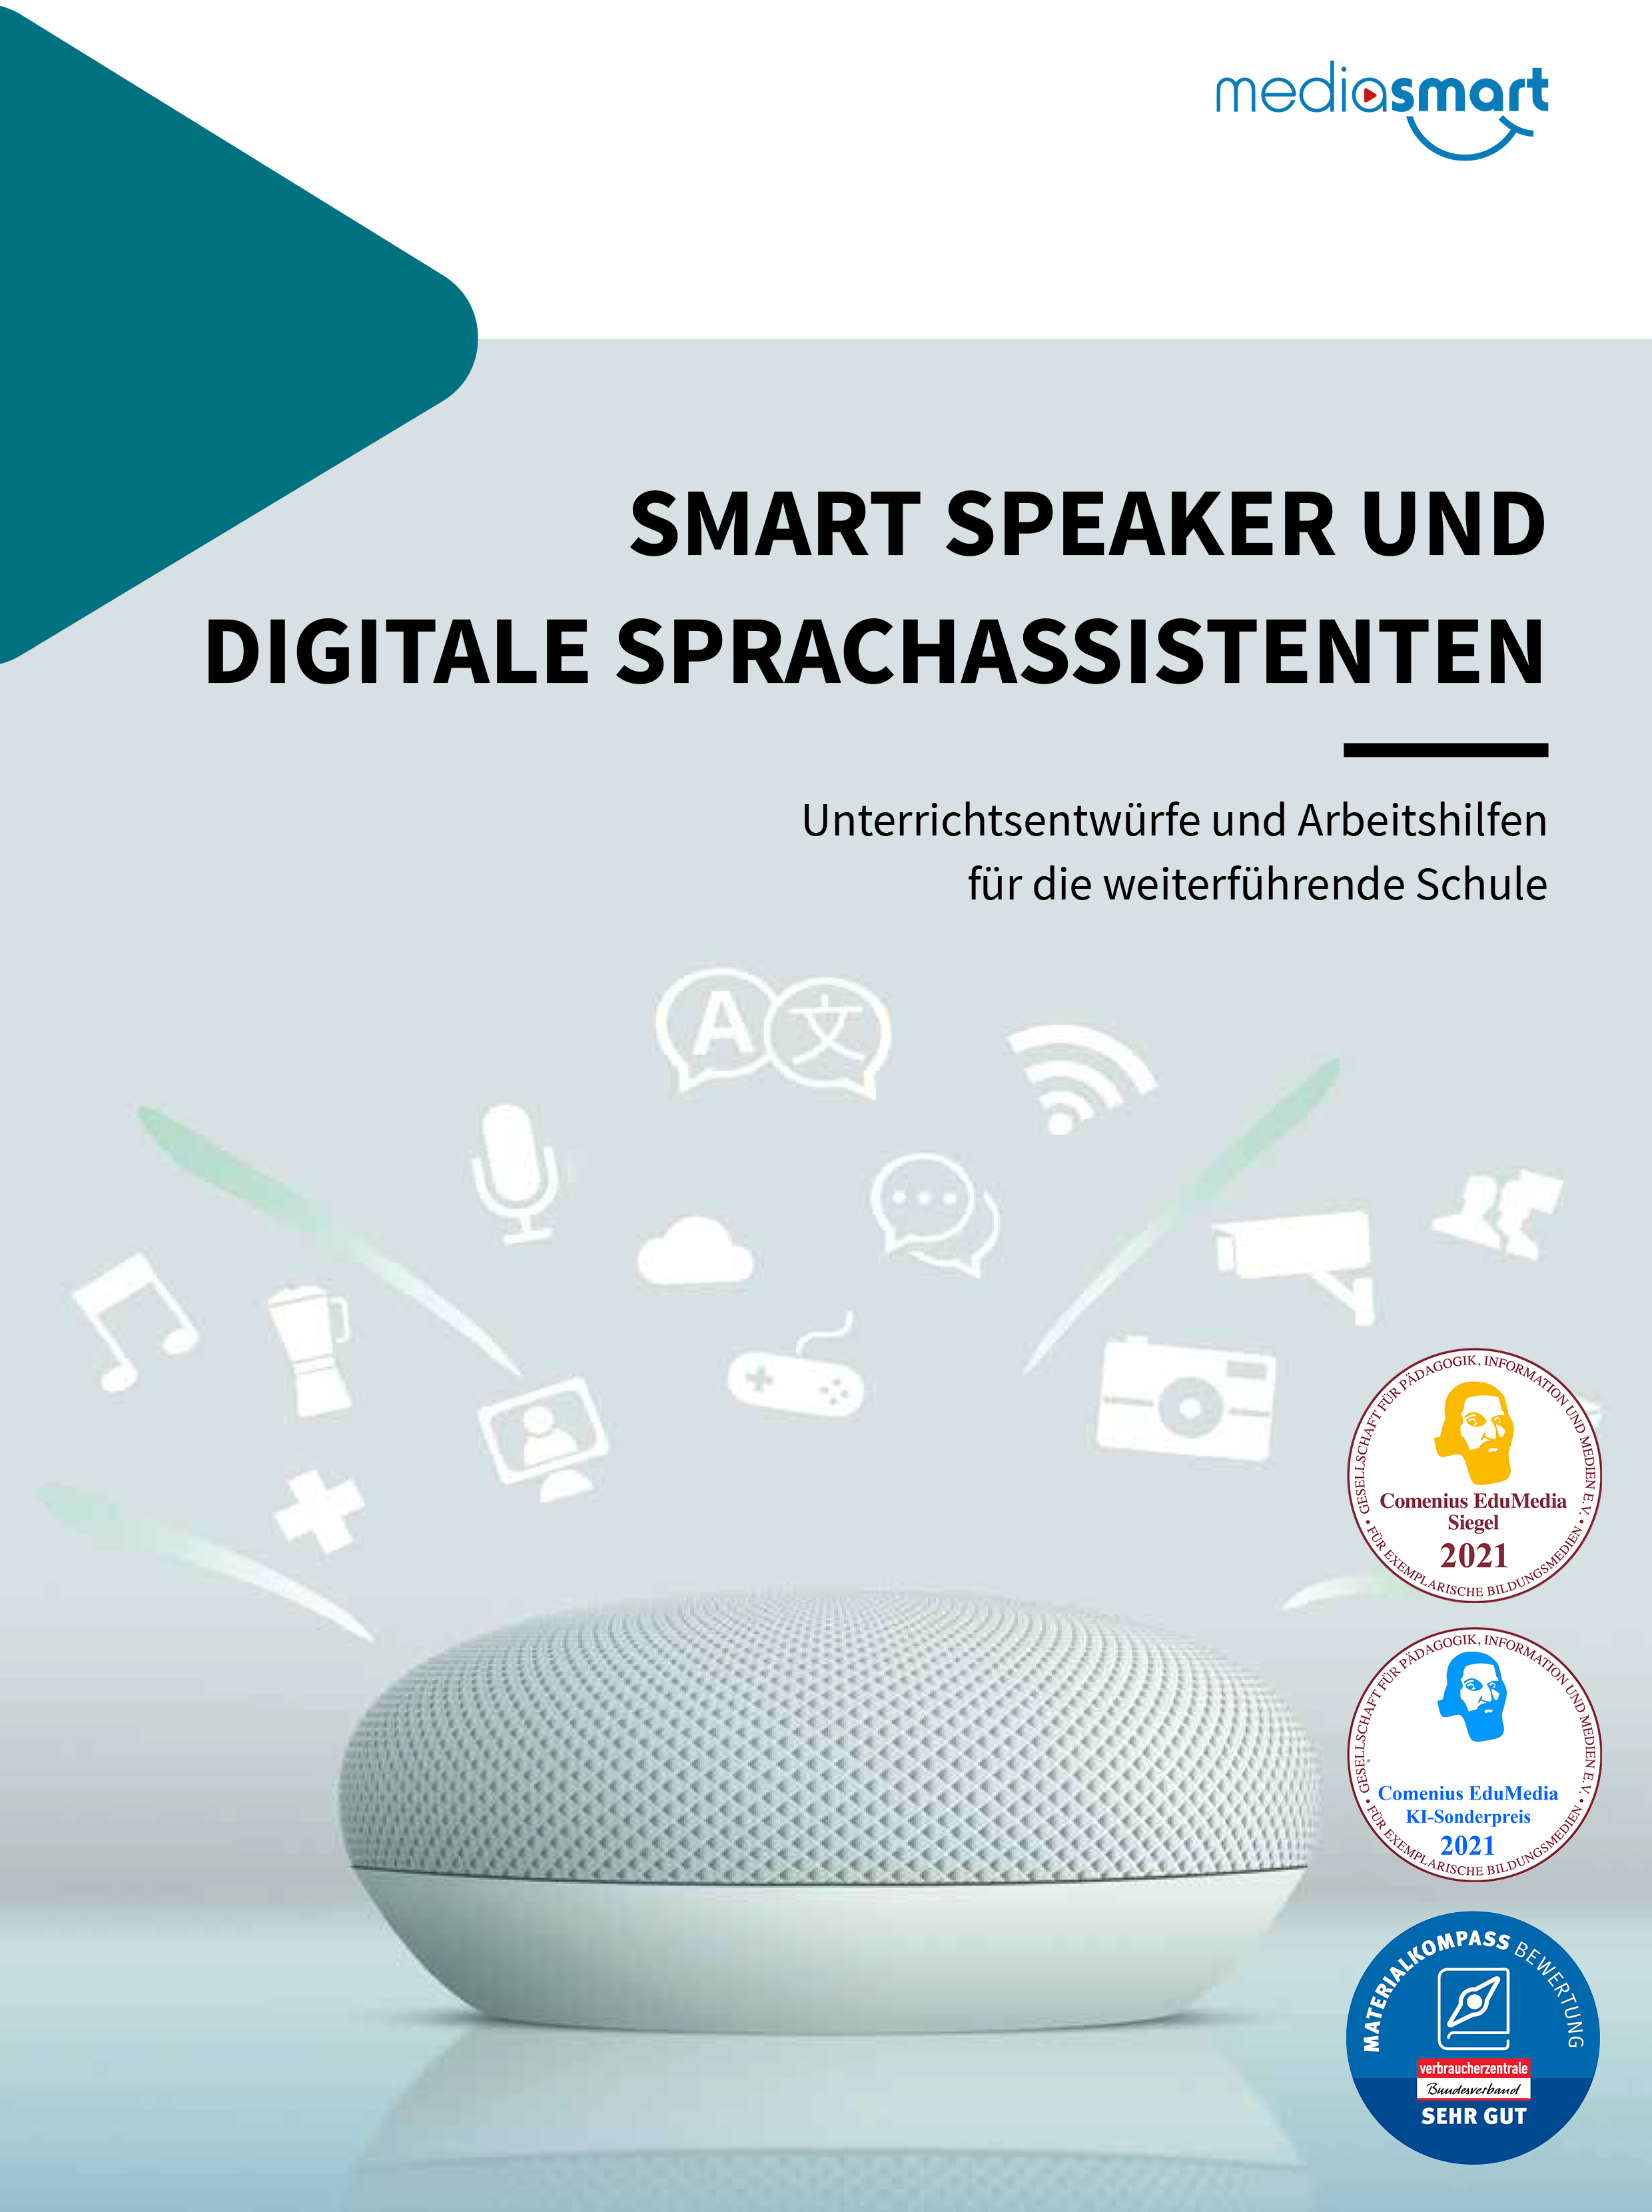 Titel_Smart-Speaker-Materialien-MediaSmart- Mit Siegeln